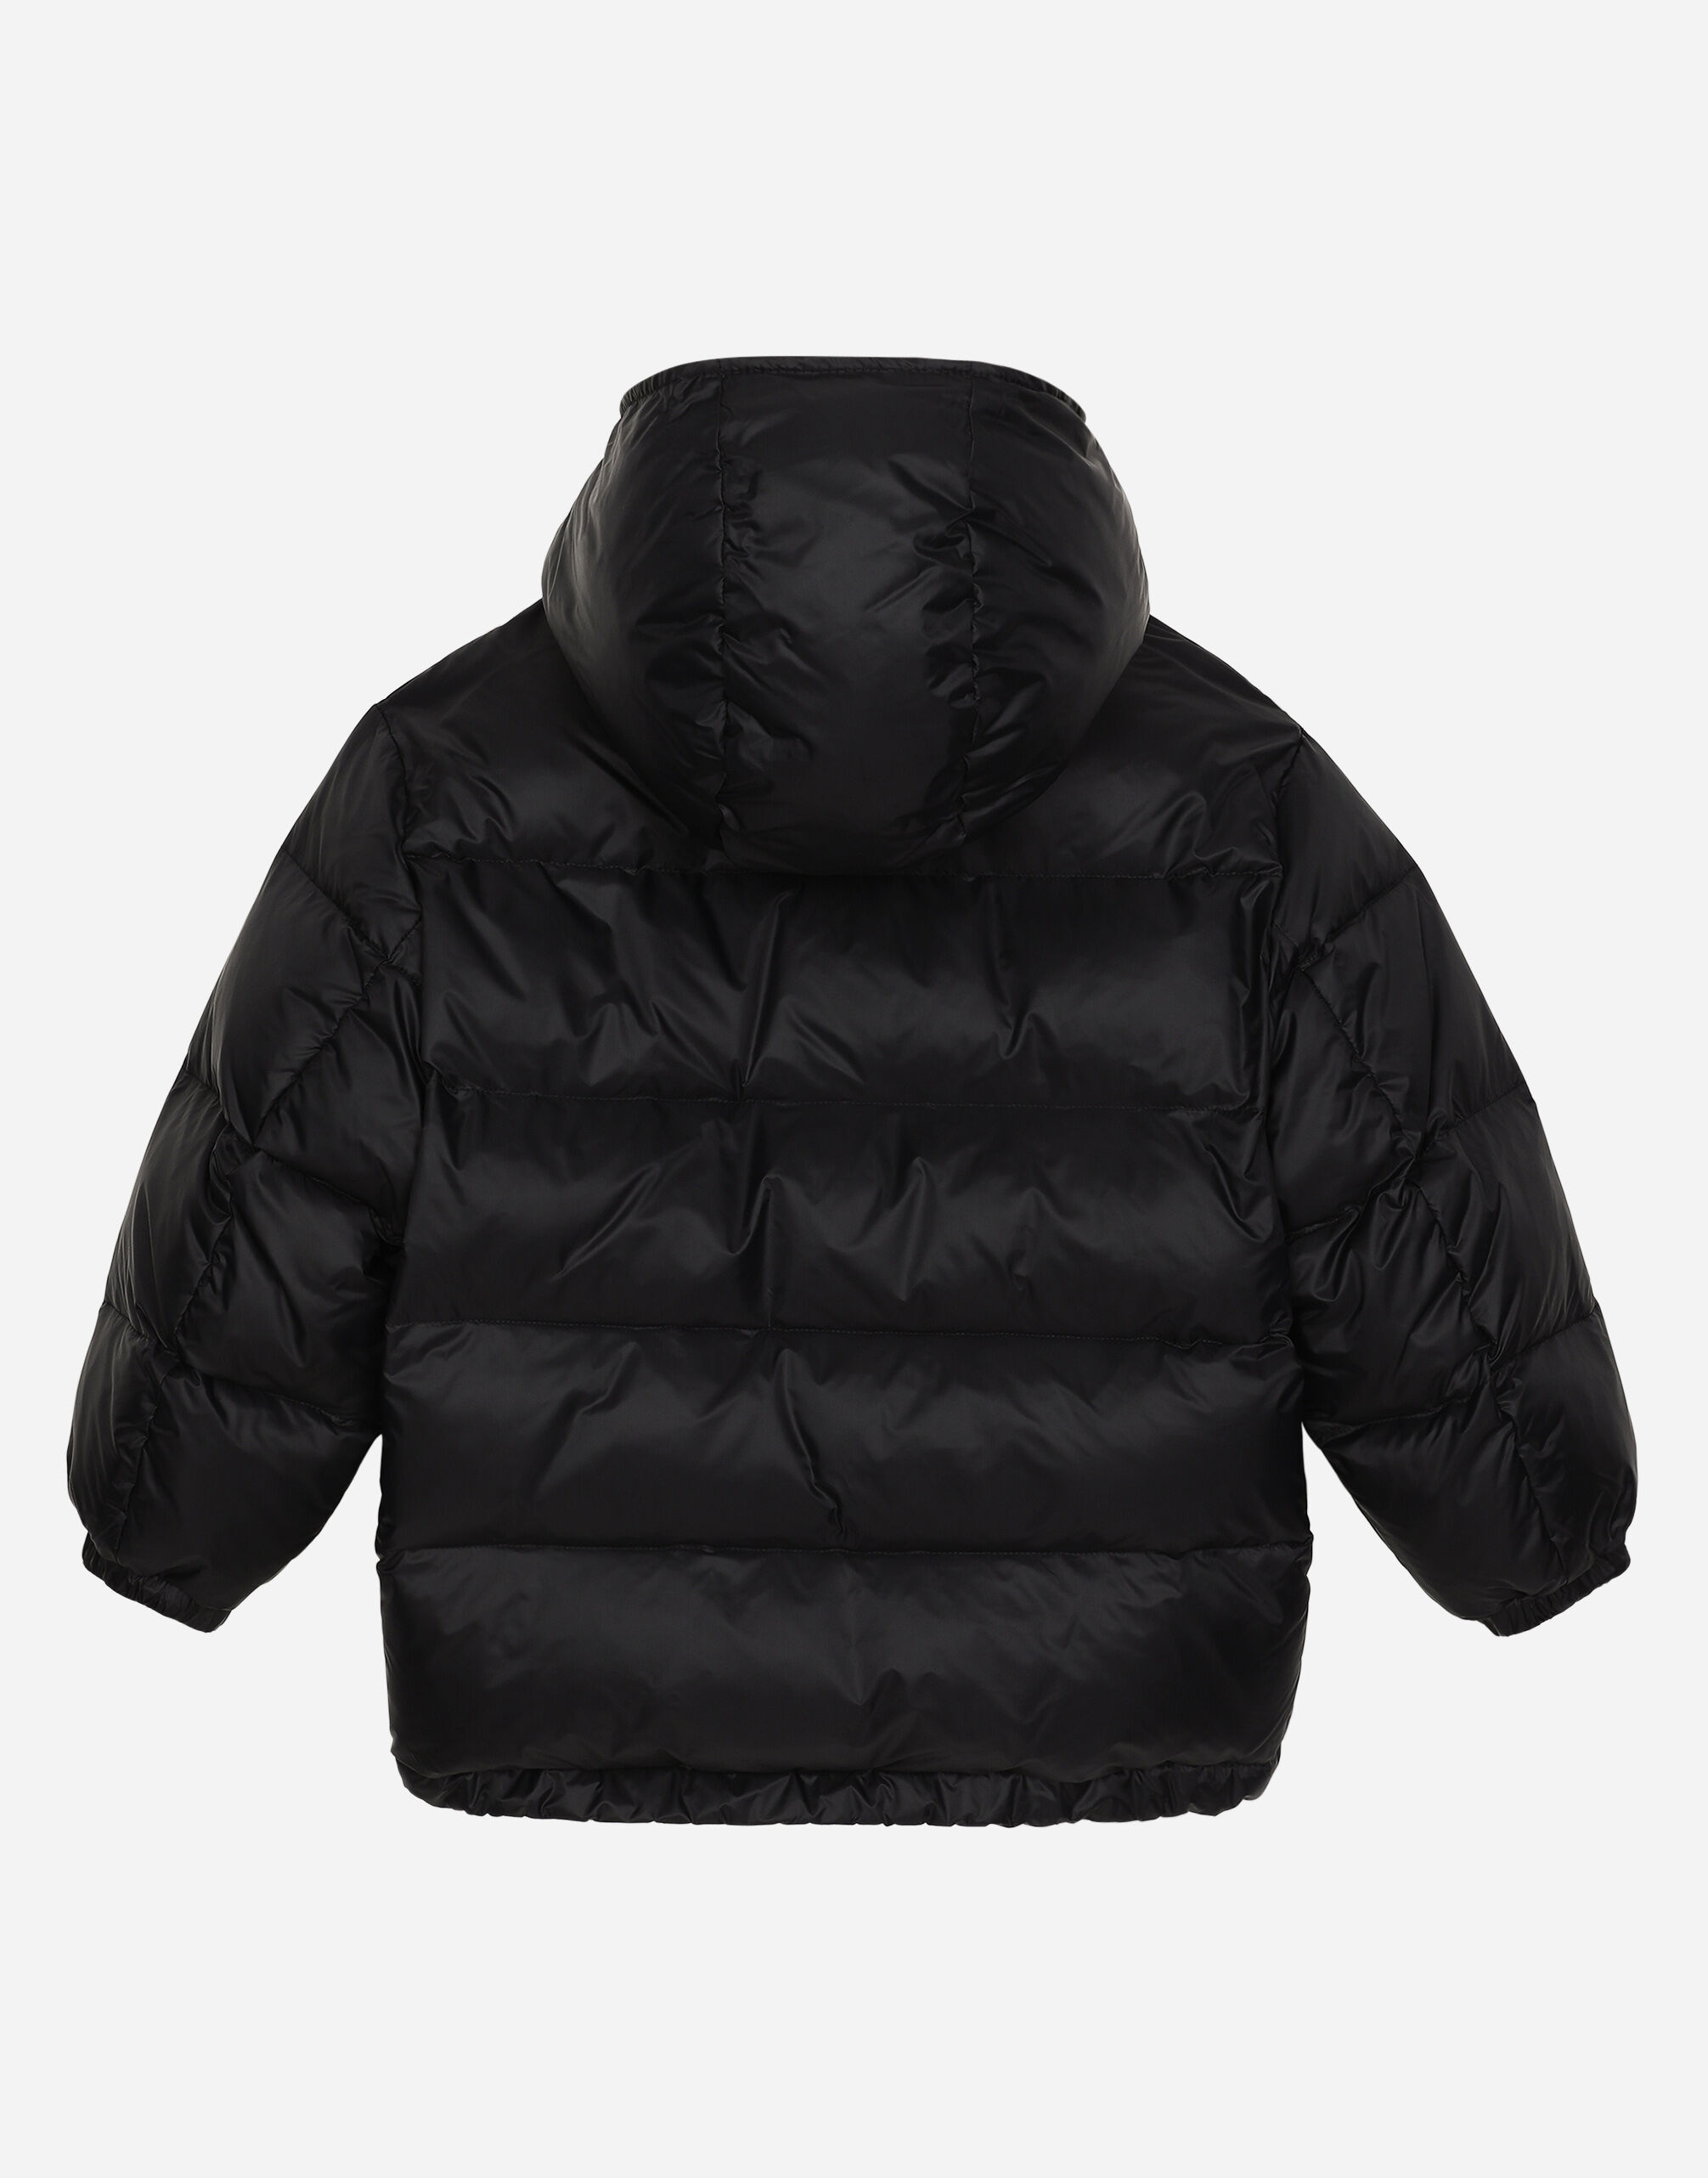 Nylon down jacket with hood and logo tag